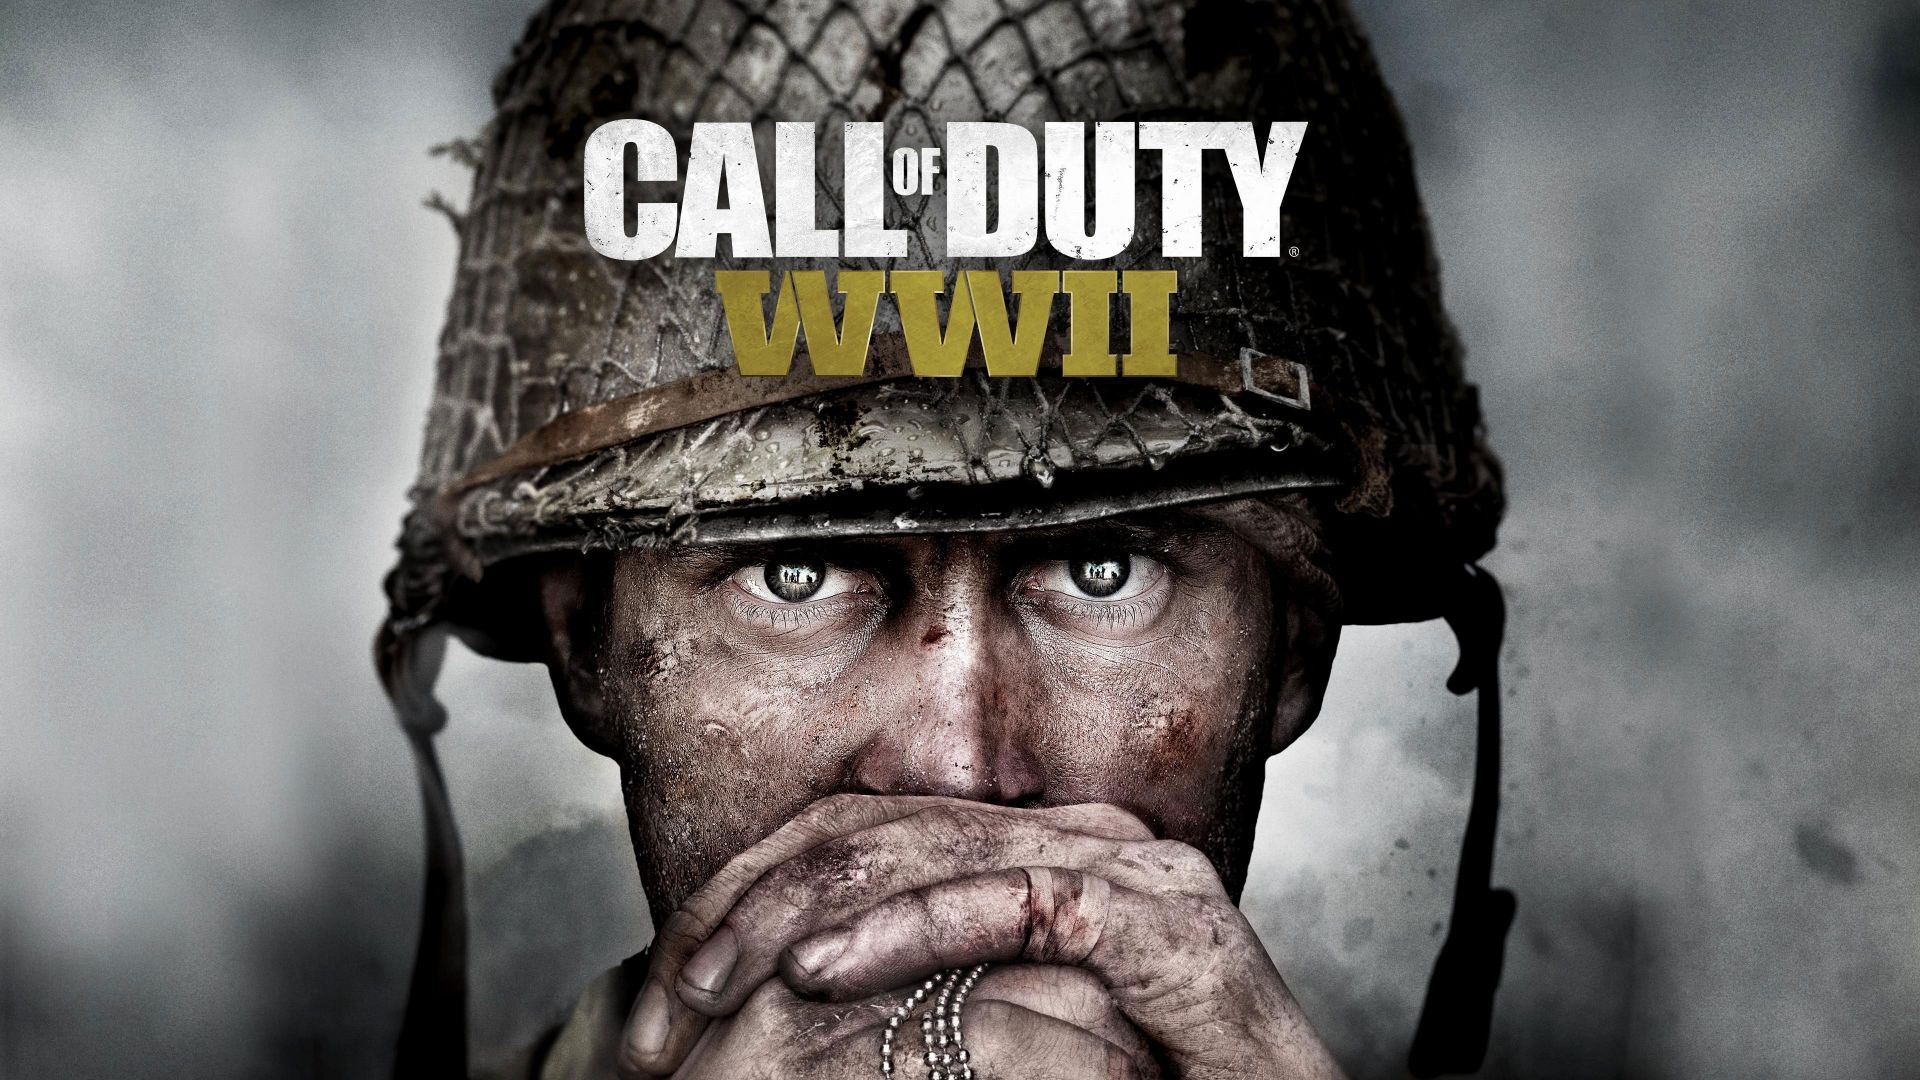 Call of Duty WWII (3 часть)